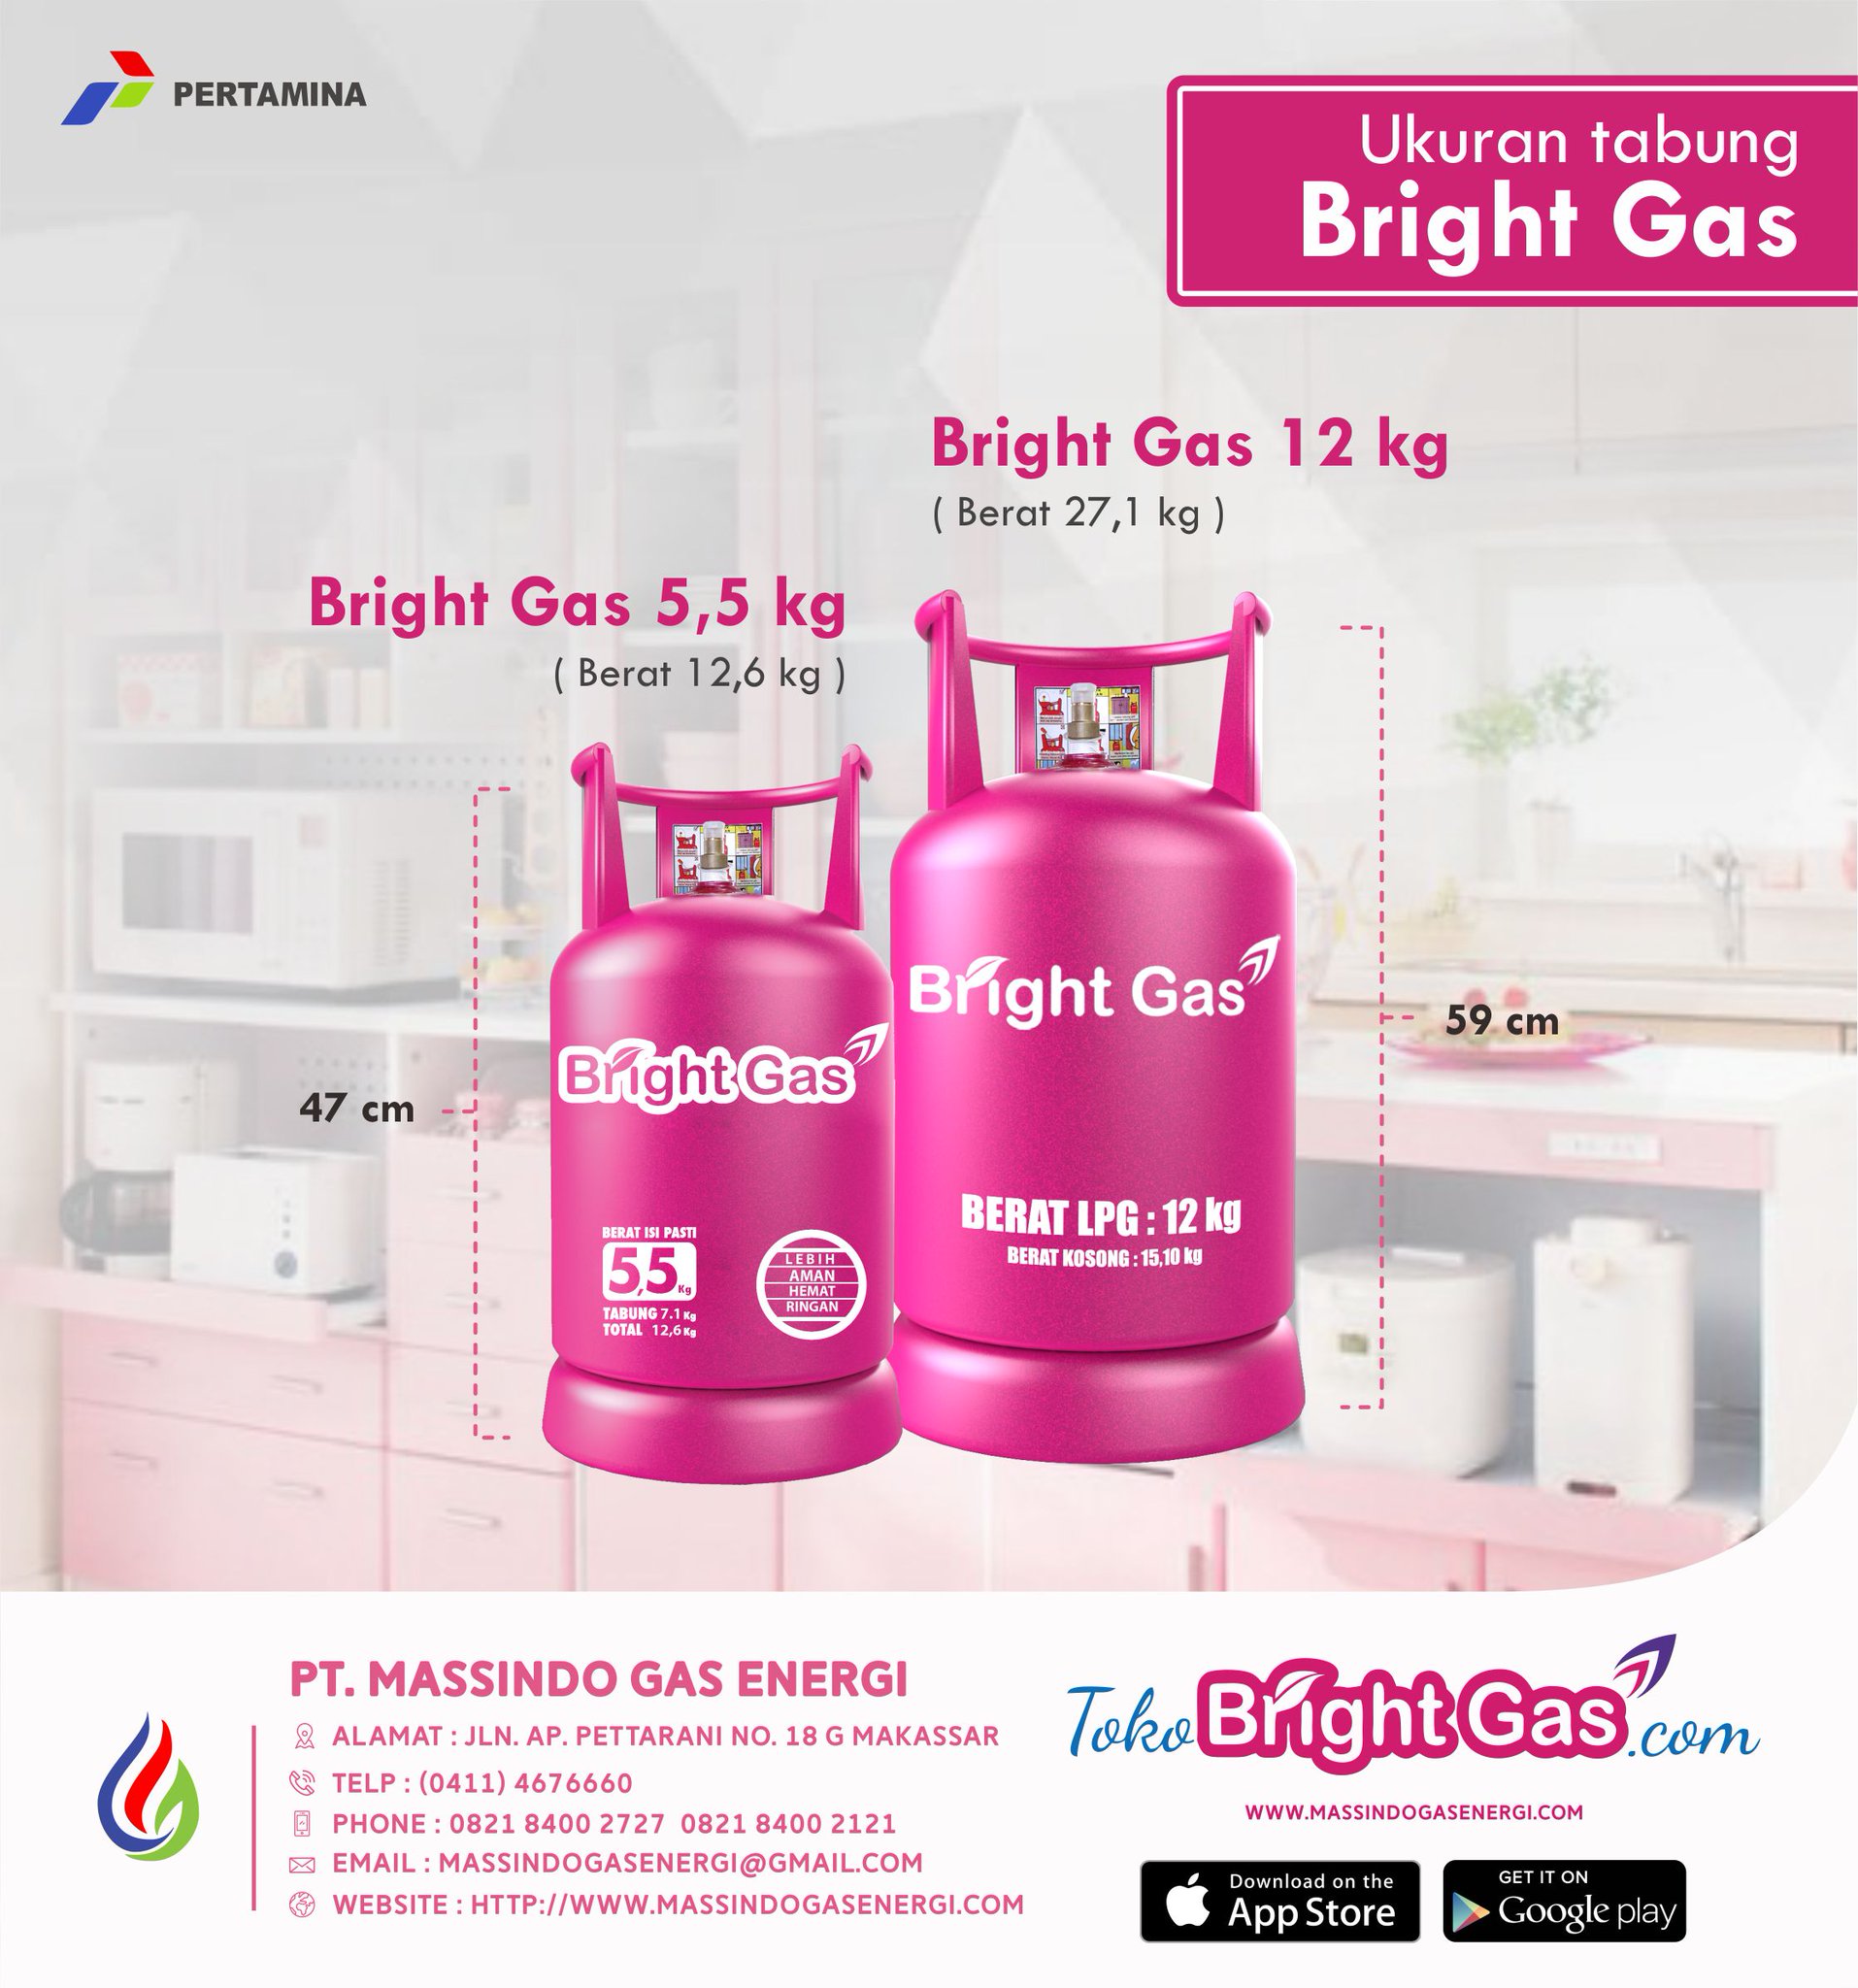 toko bright gas  on Twitter ukuran tabung  Bright Gas  